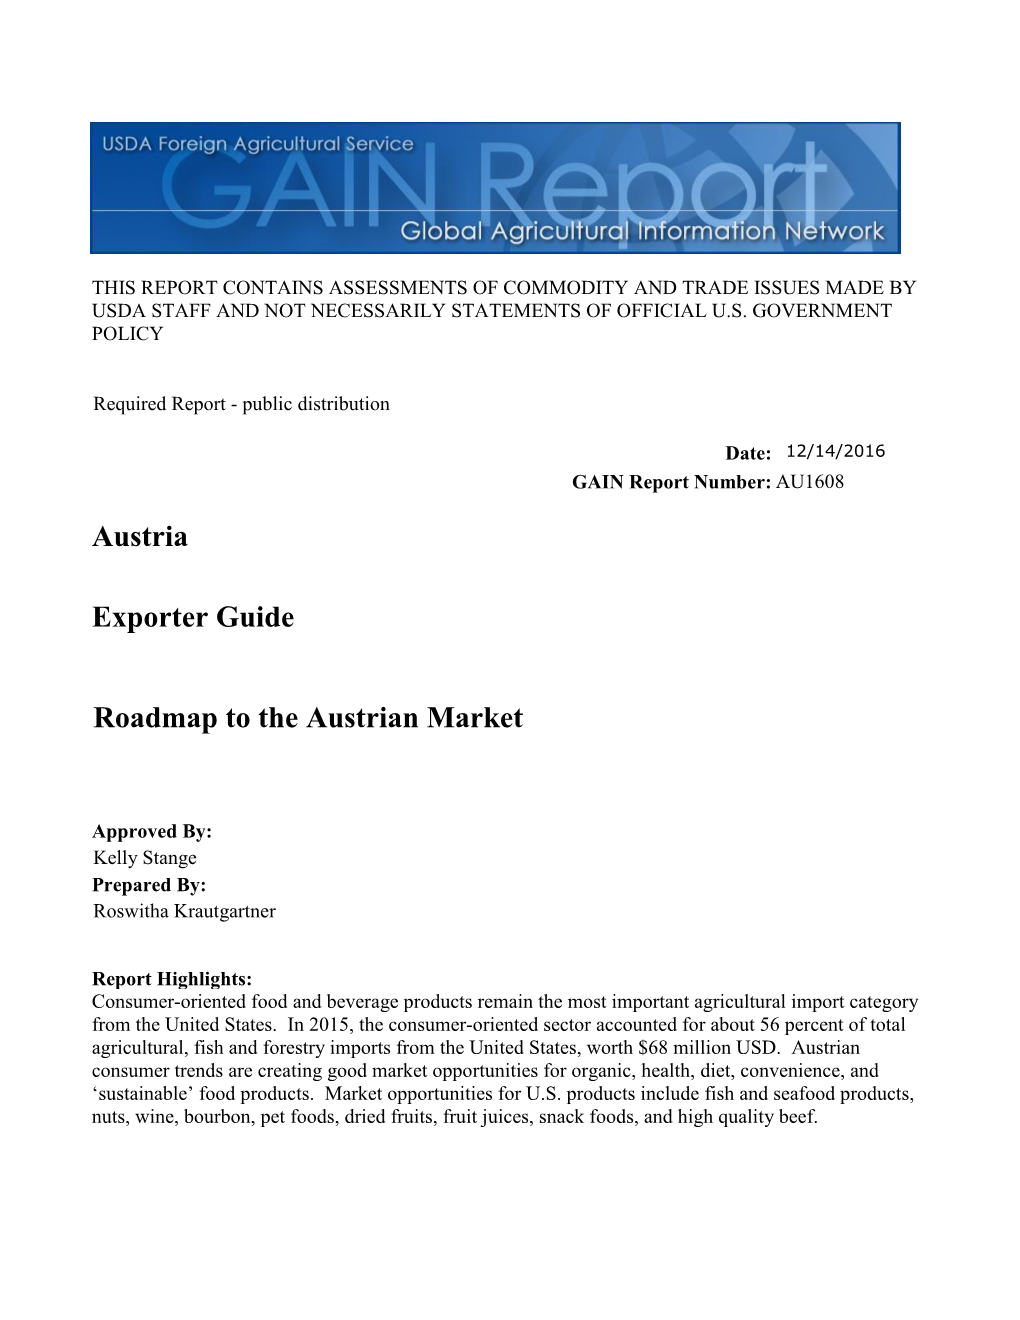 Roadmap to the Austrian Market Exporter Guide Austria